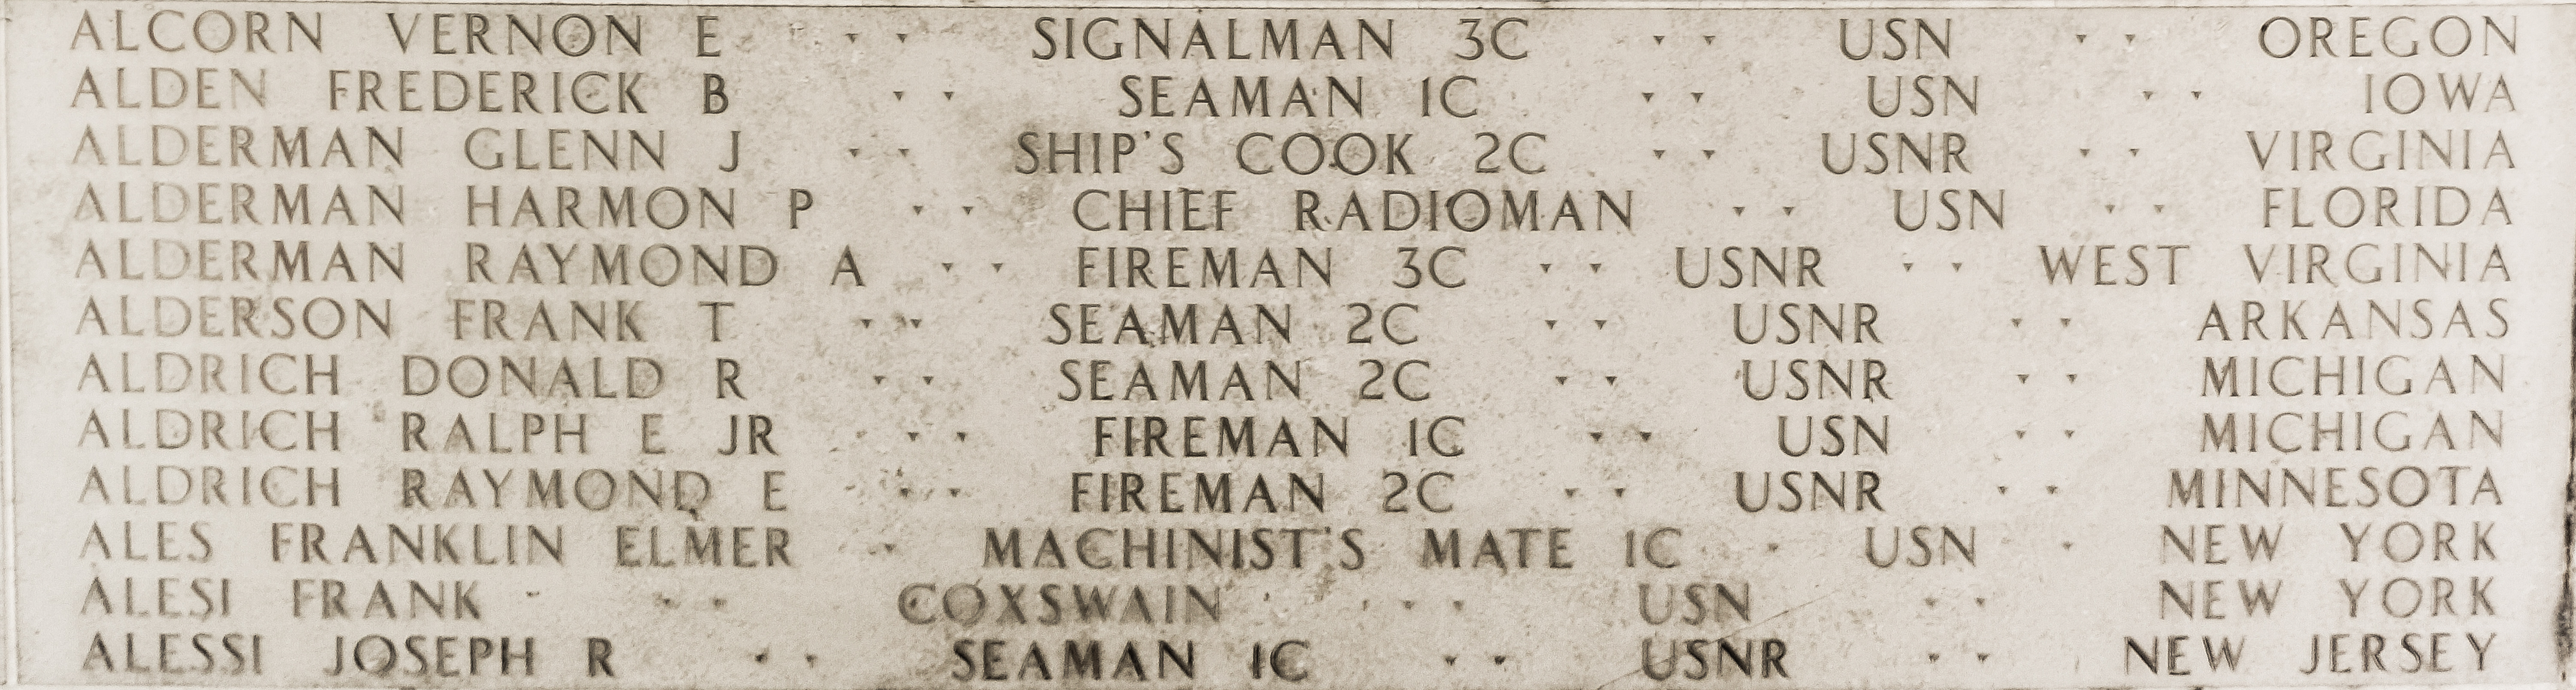 Glenn J. Alderman, Ship's Cook Second Class